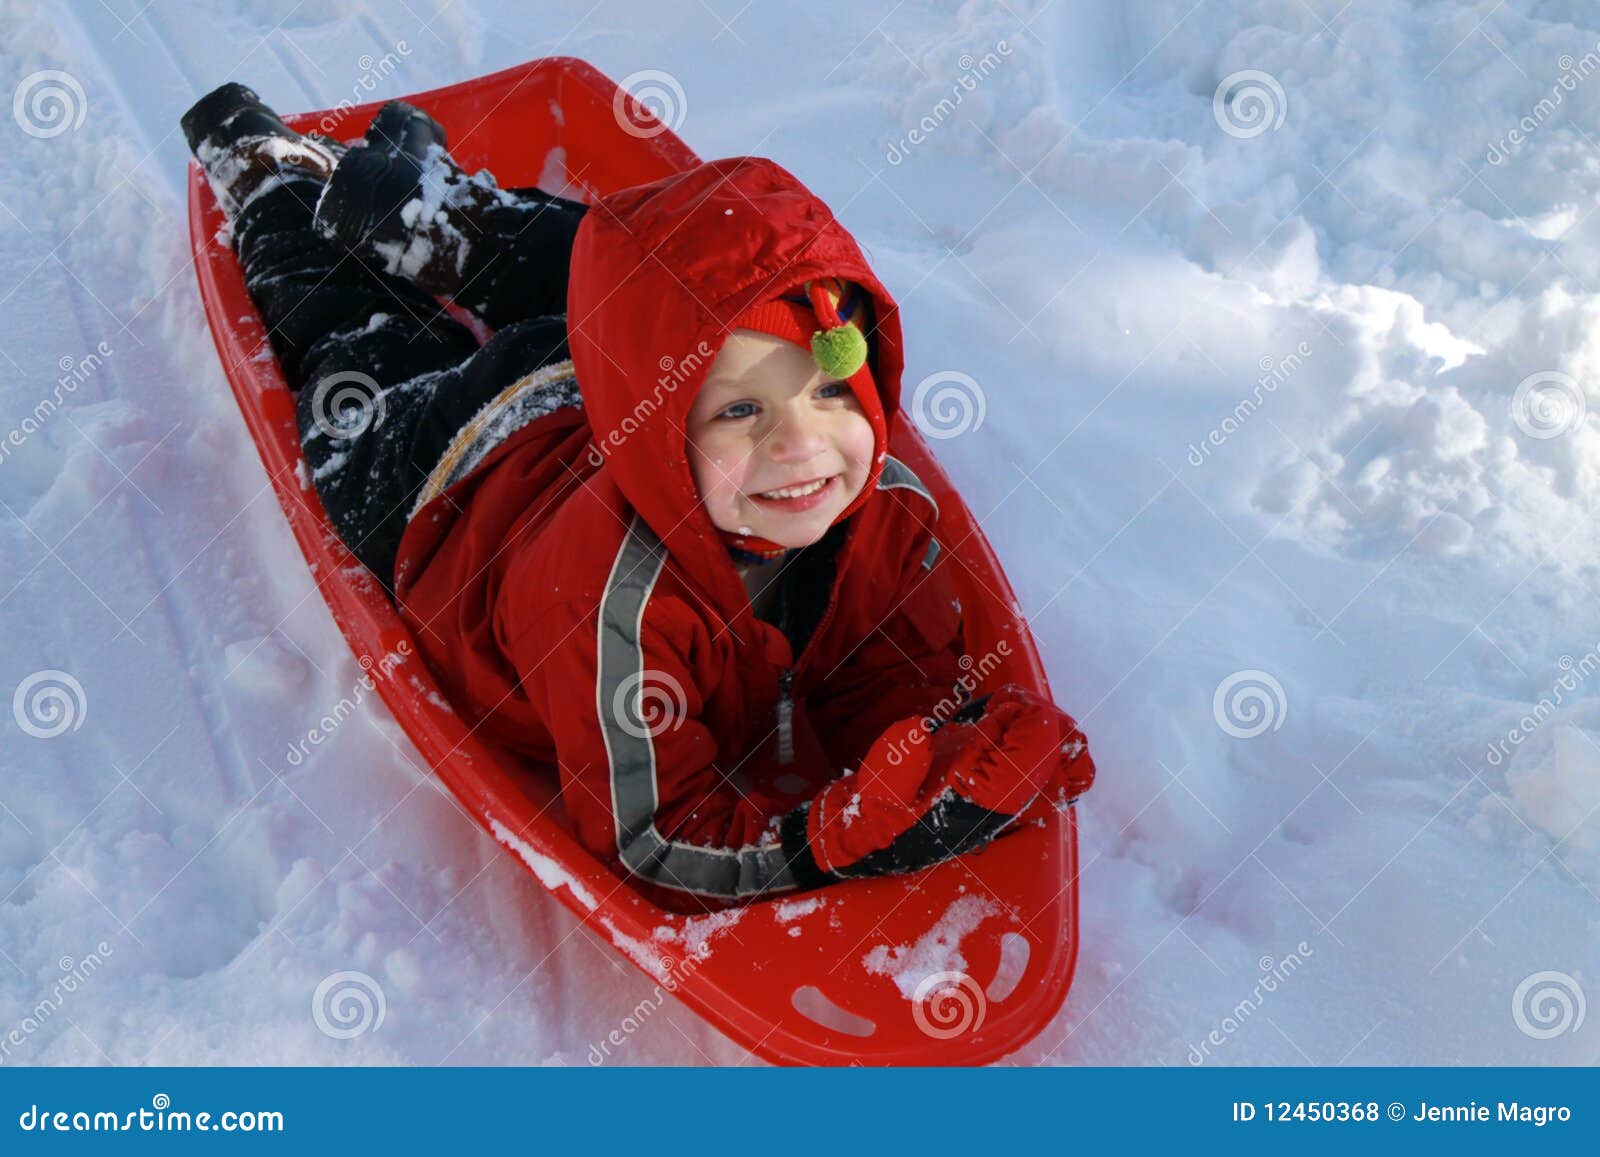 toddler boy sledding snow 12450368